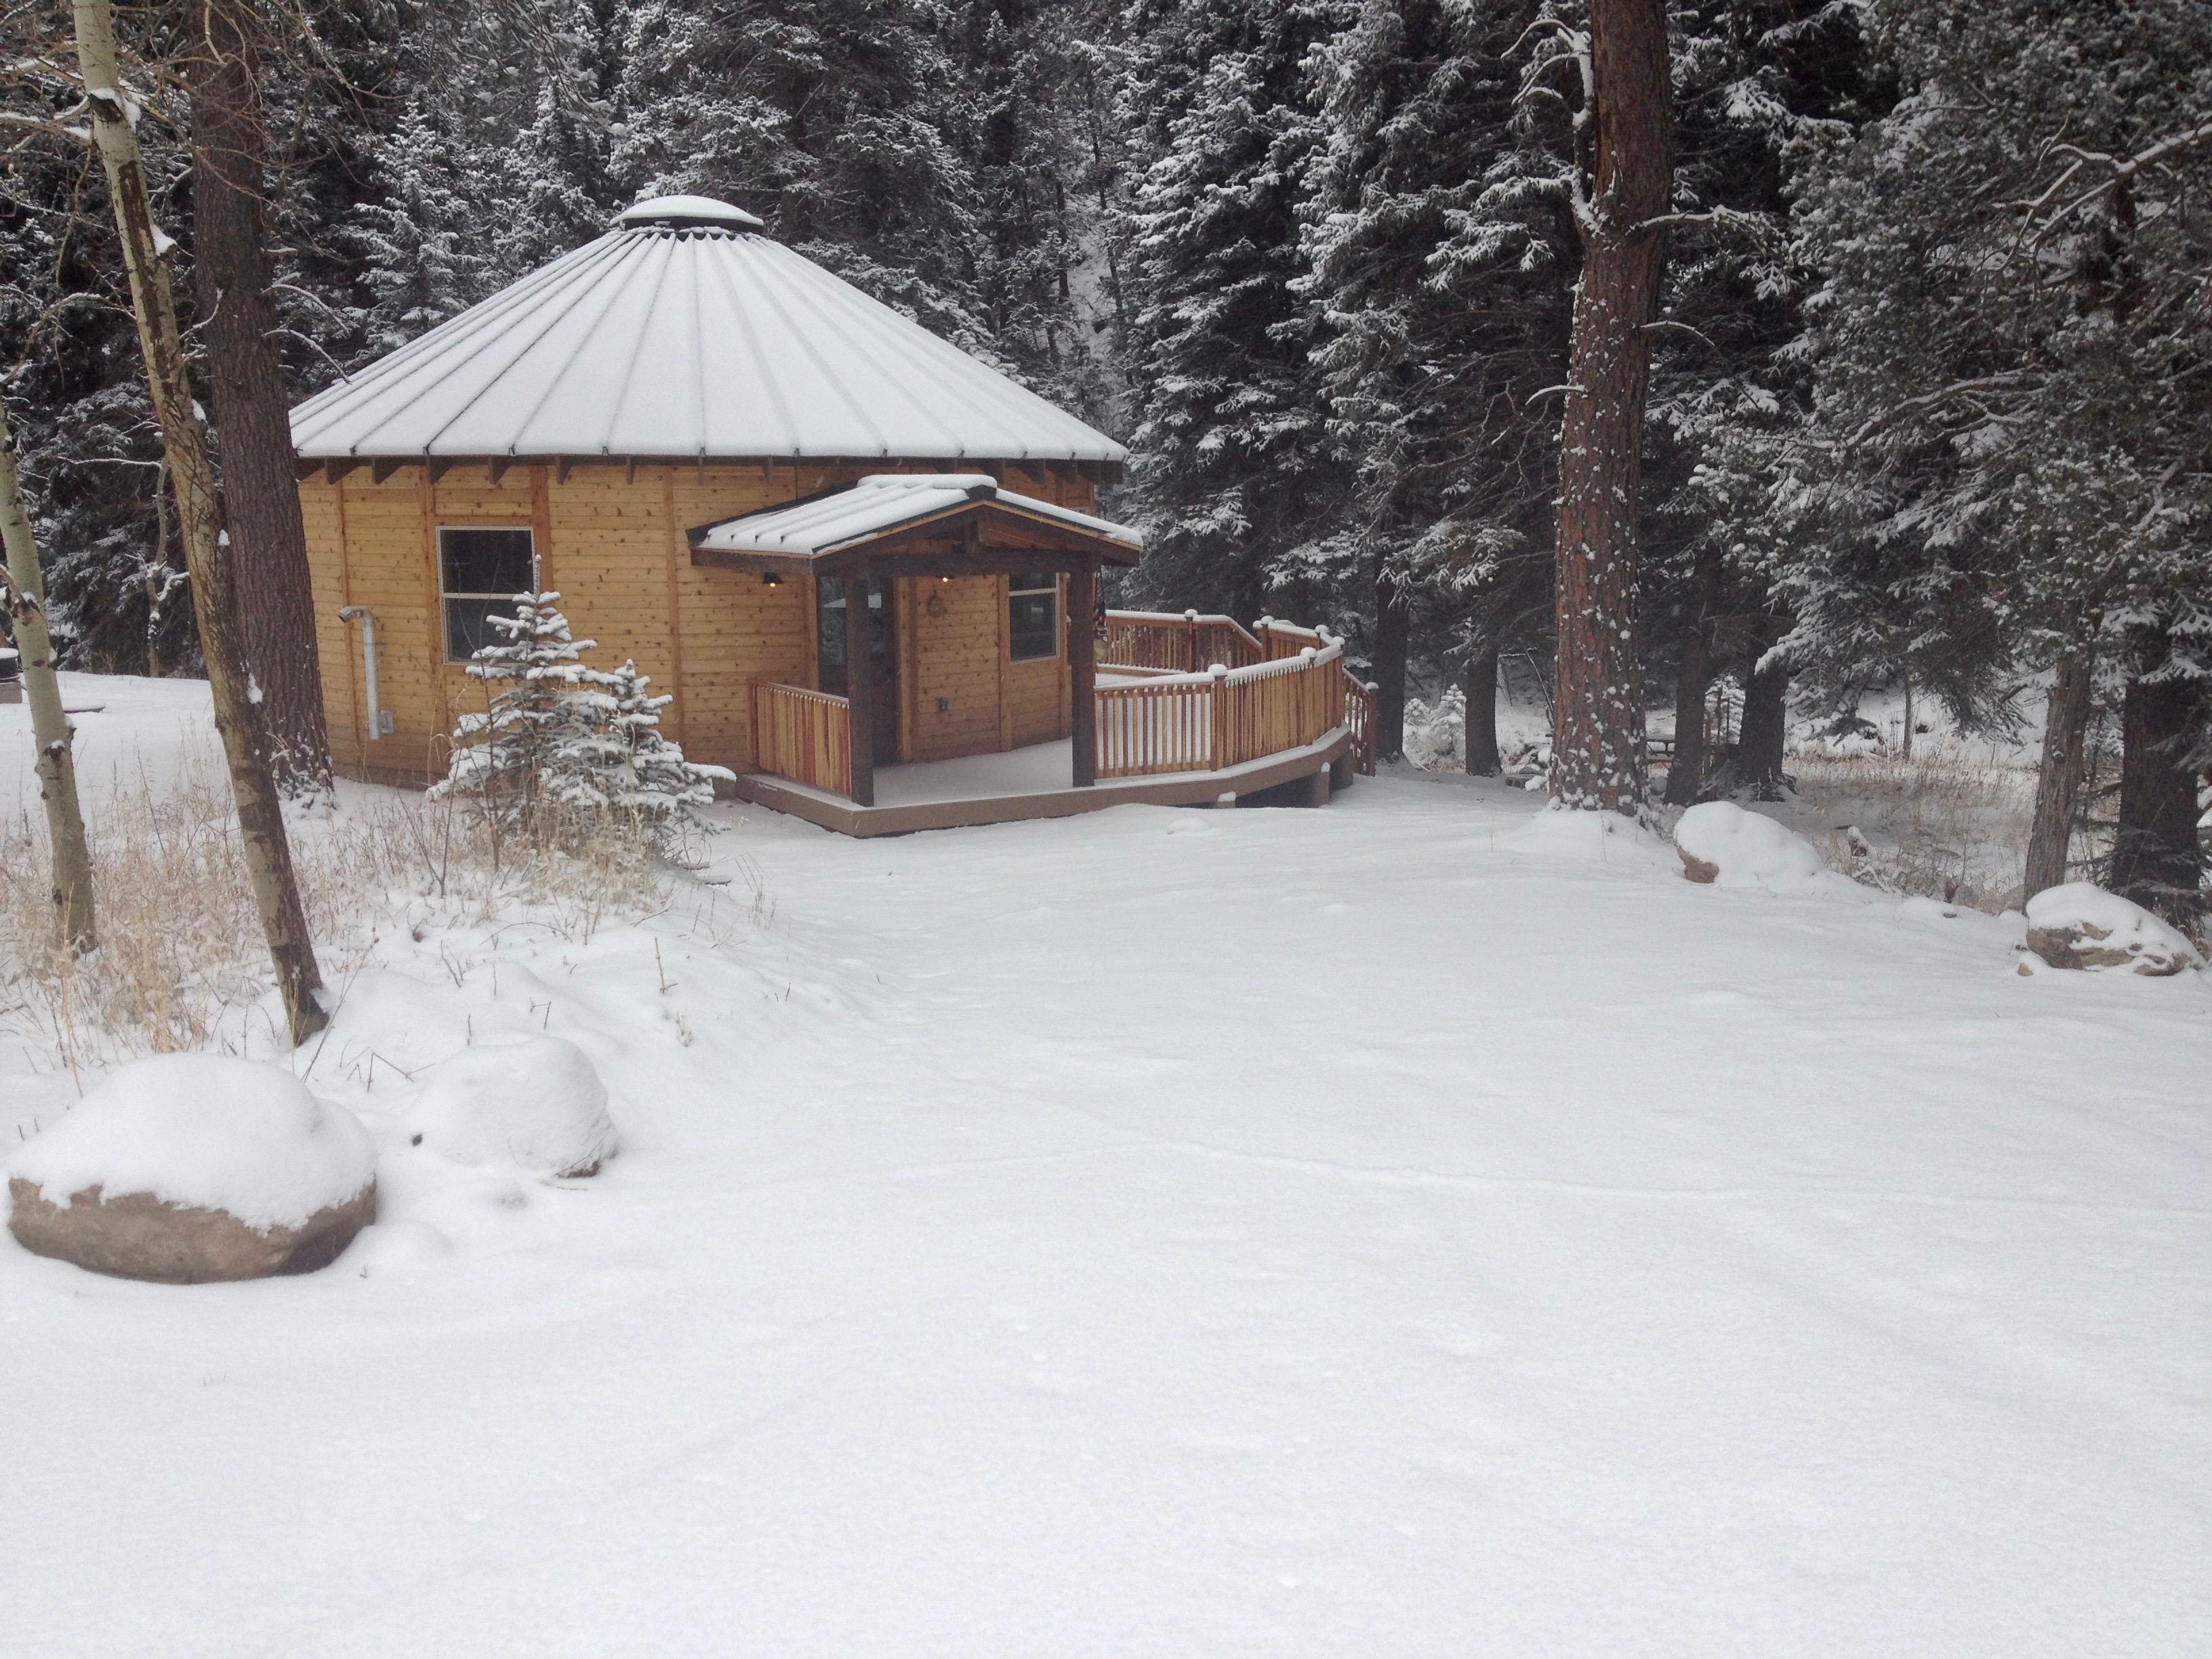 Yurt in fresh snow